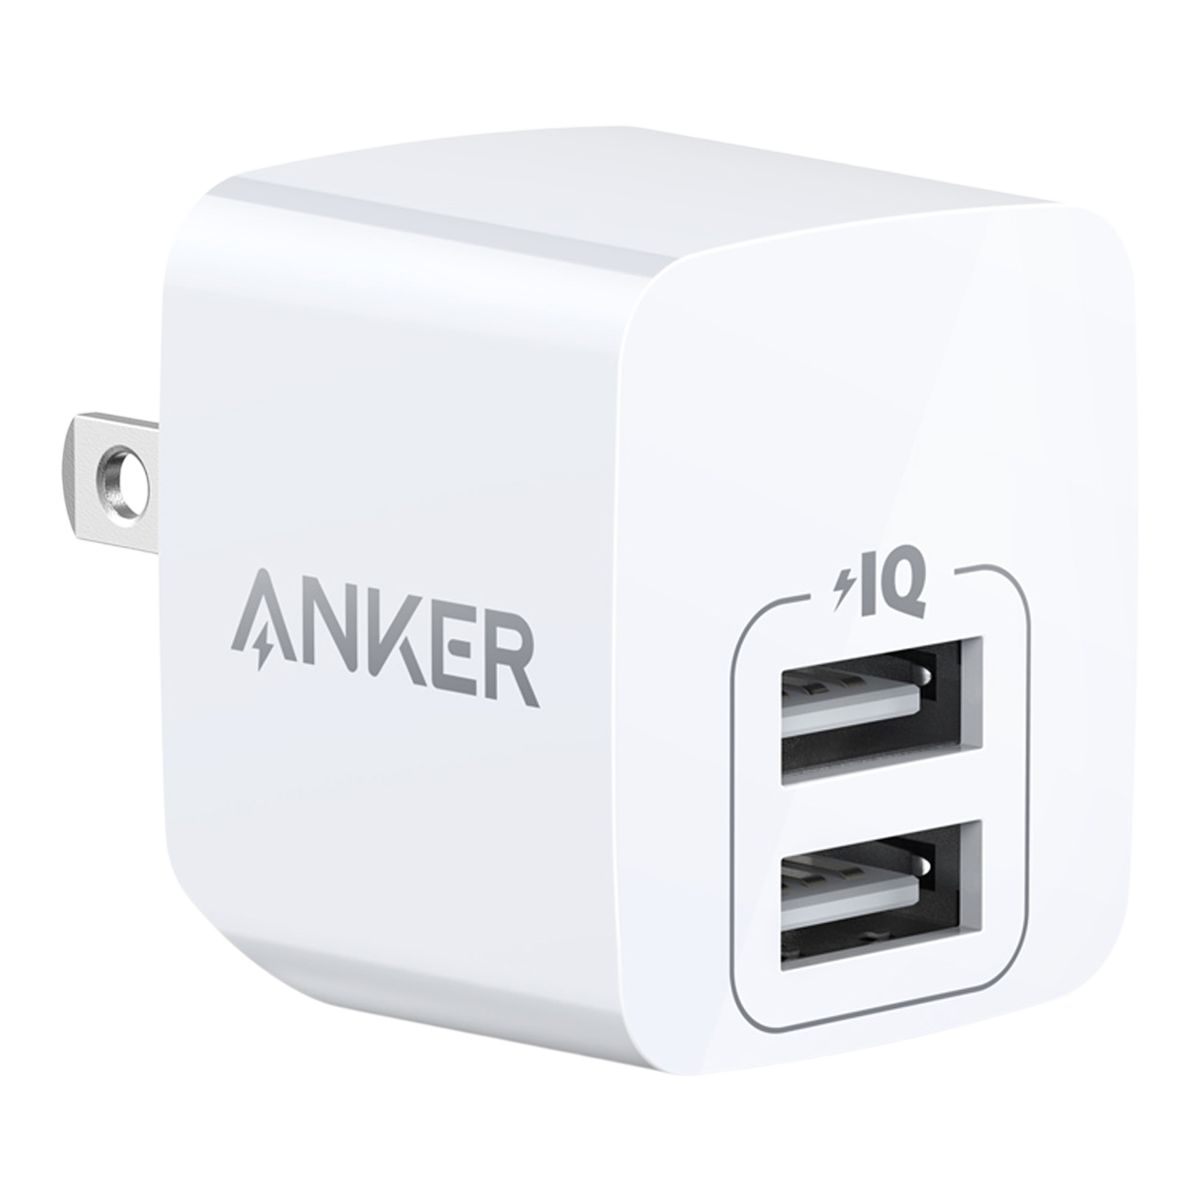 Anker PowerPort Mini Dual Port Charger